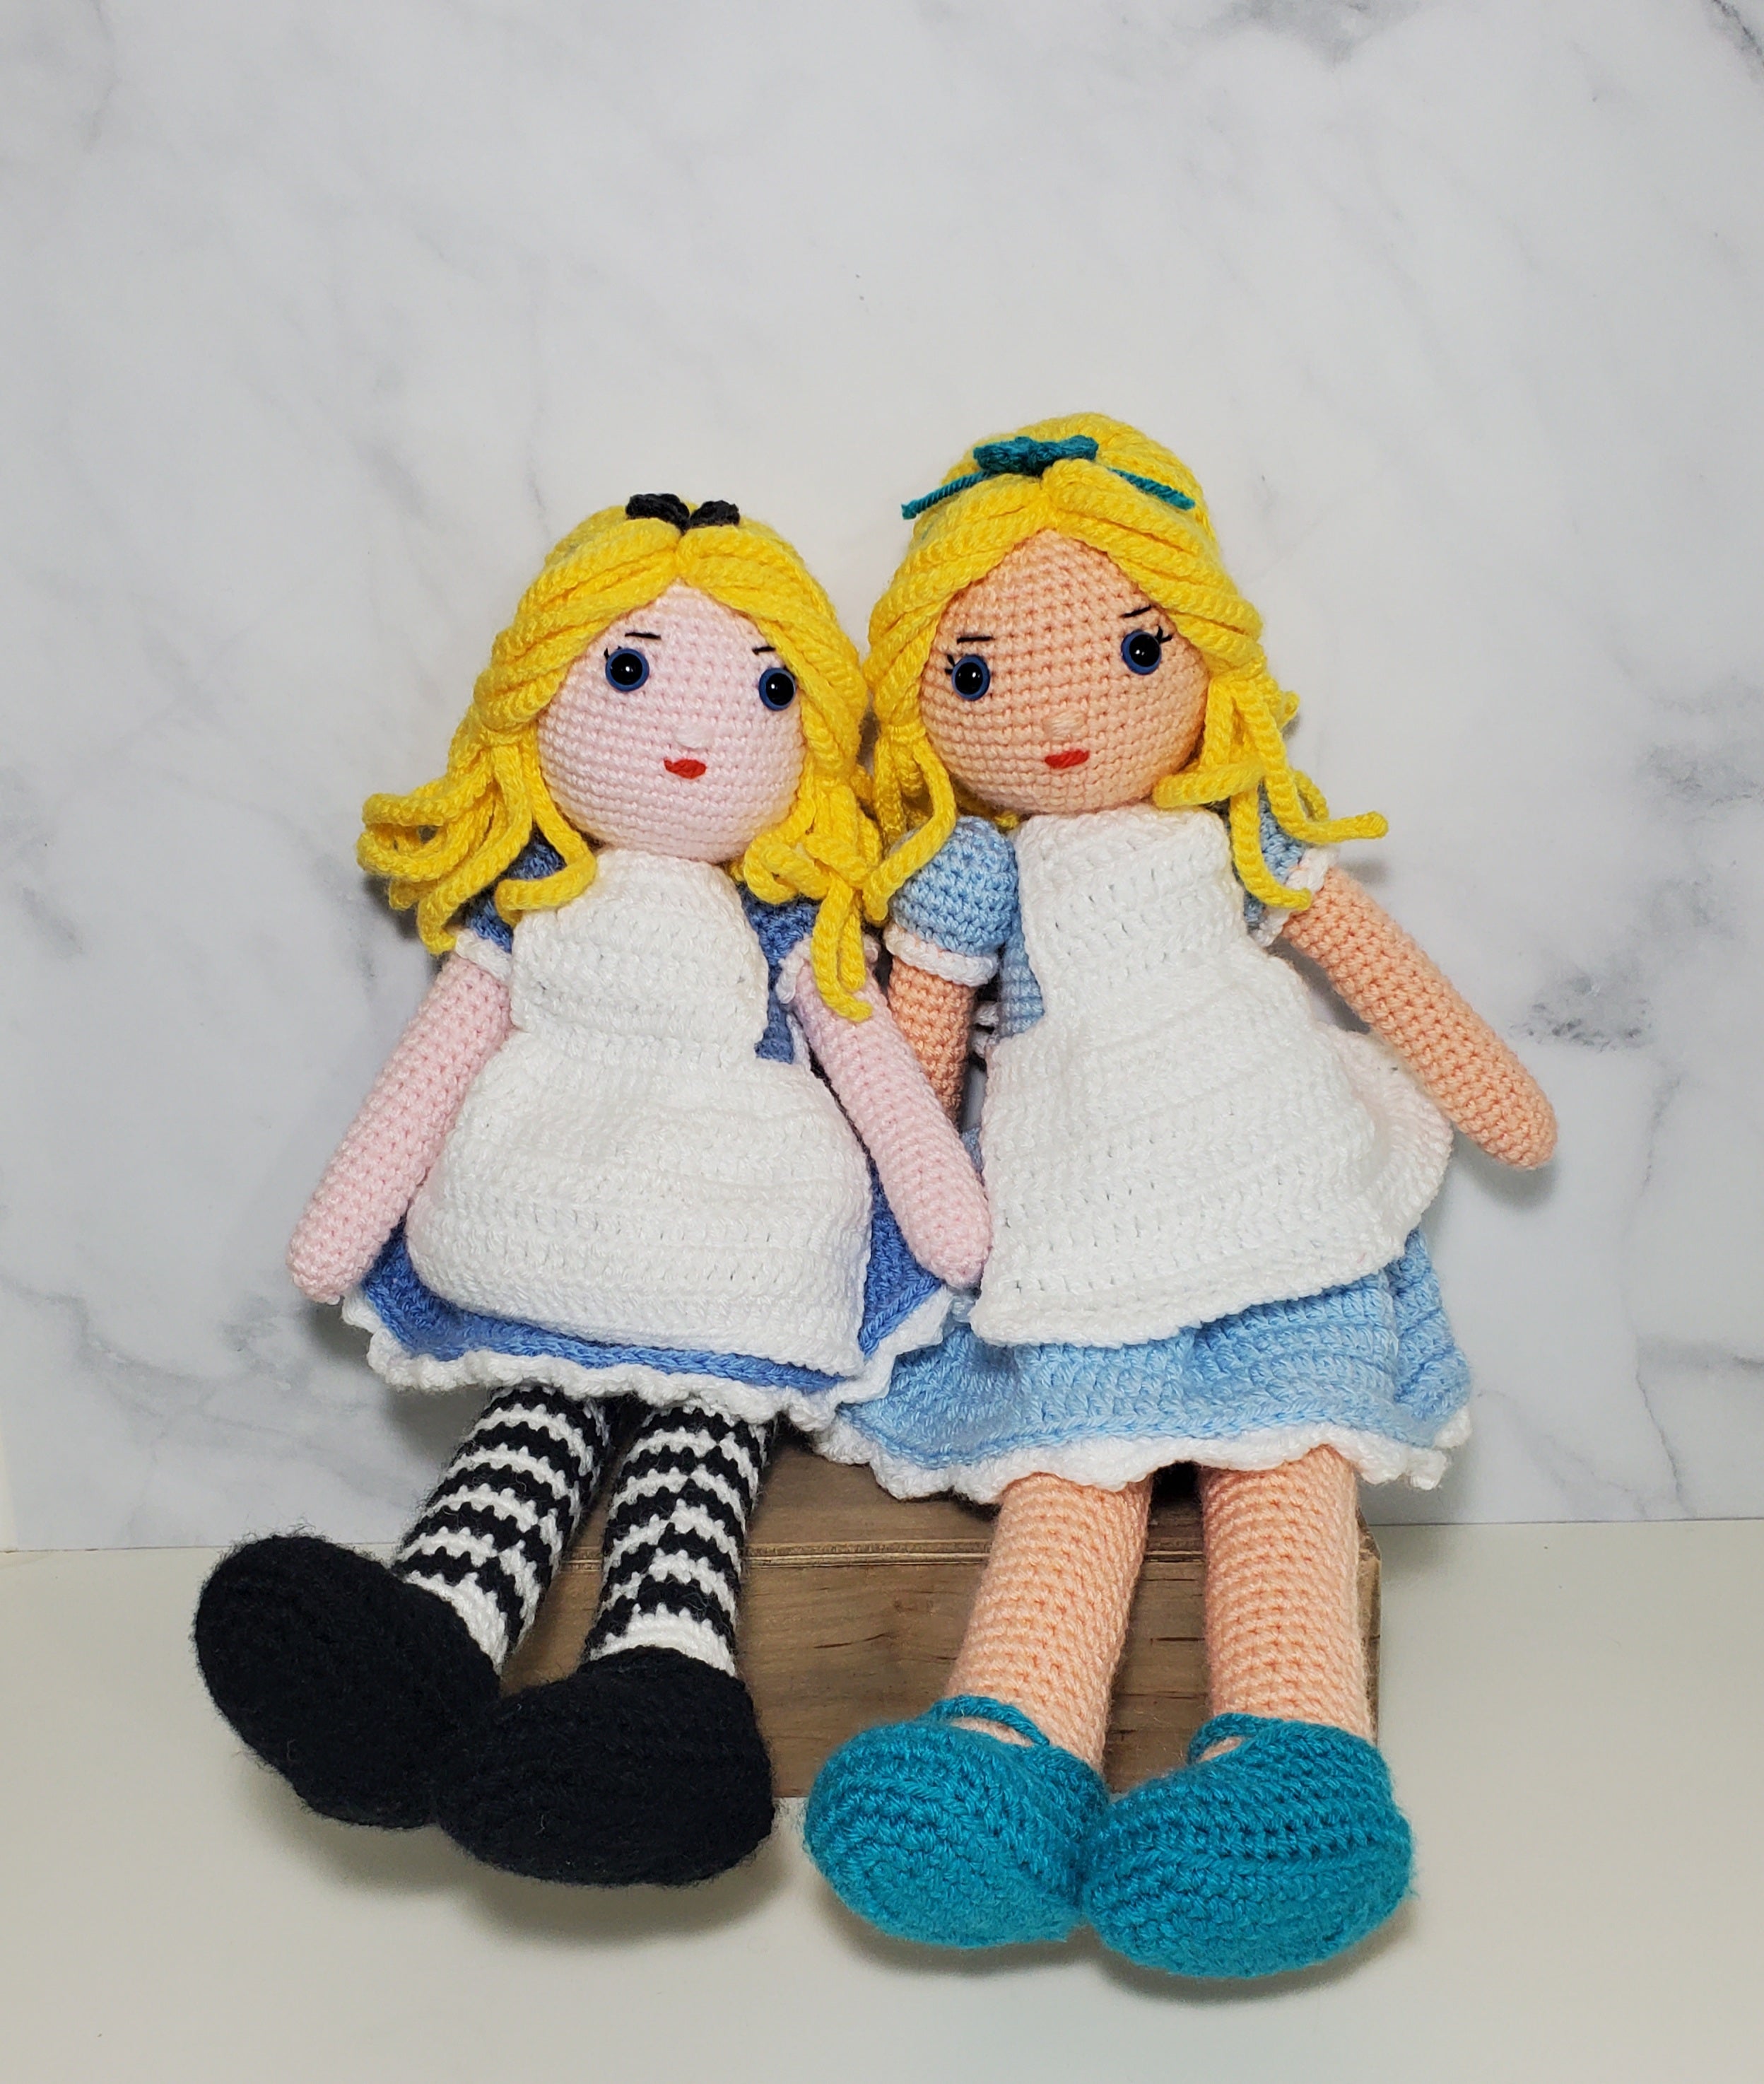 Crochet Character - Alice in Wonderland - Large